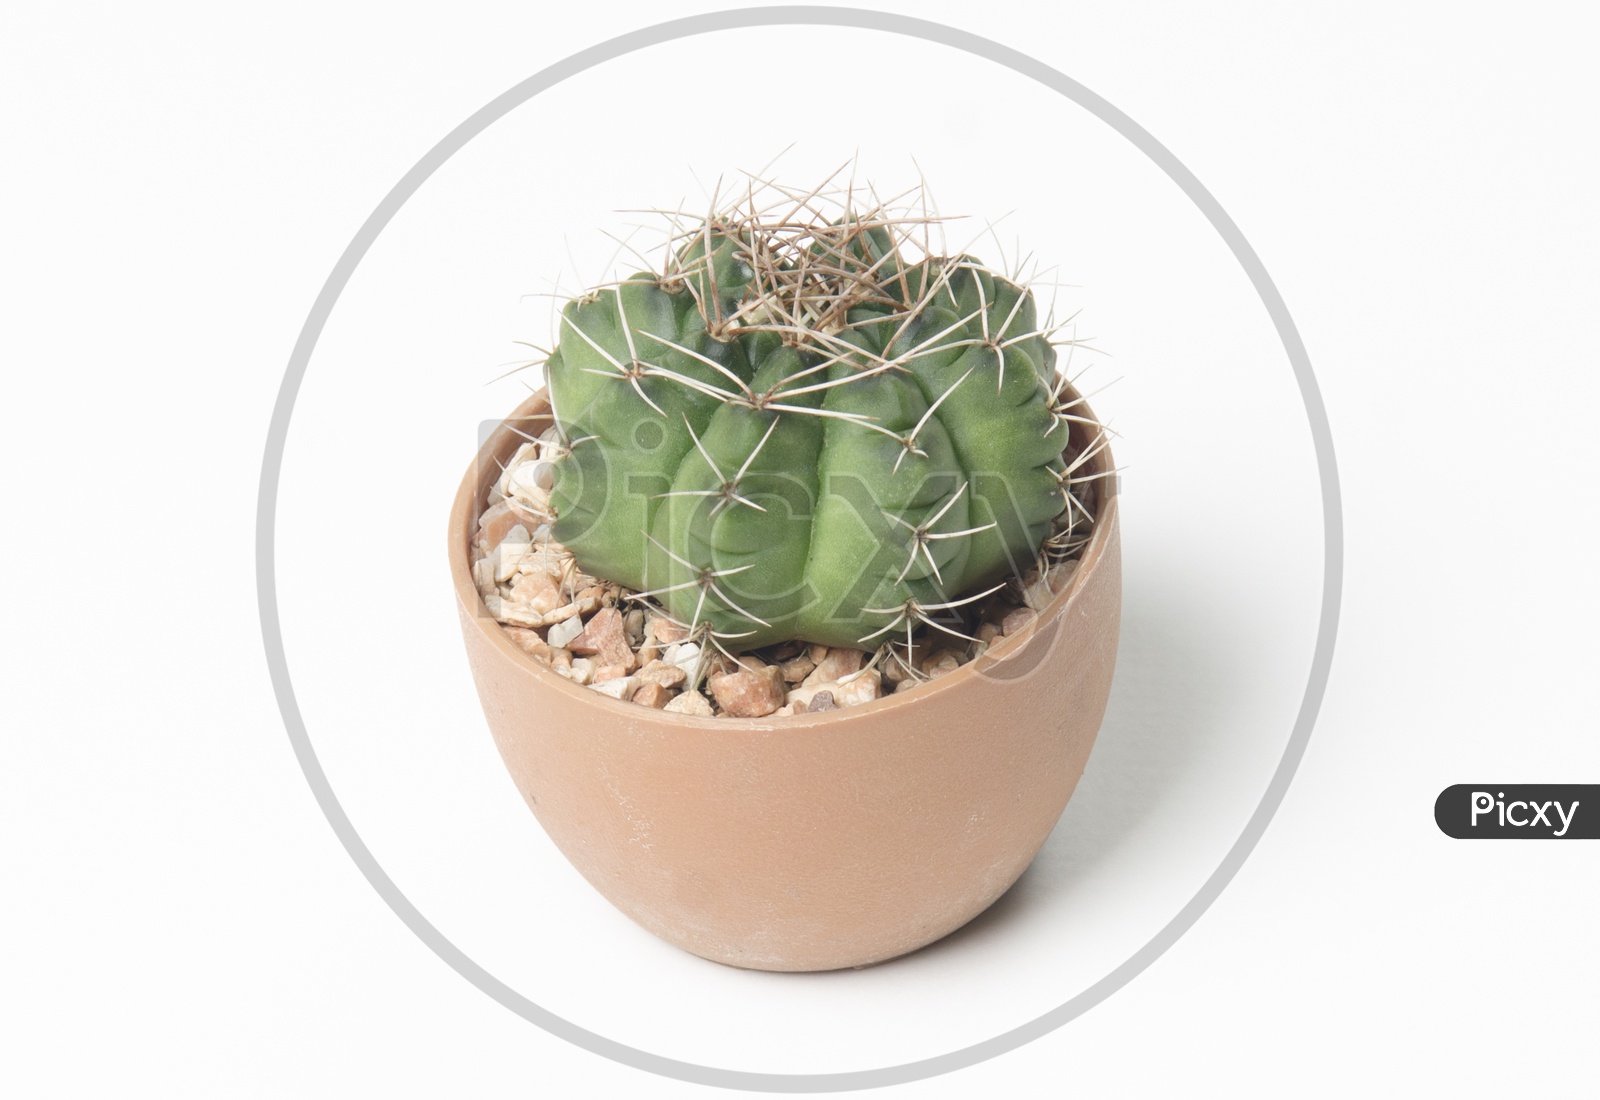 A Small cactus plant pot